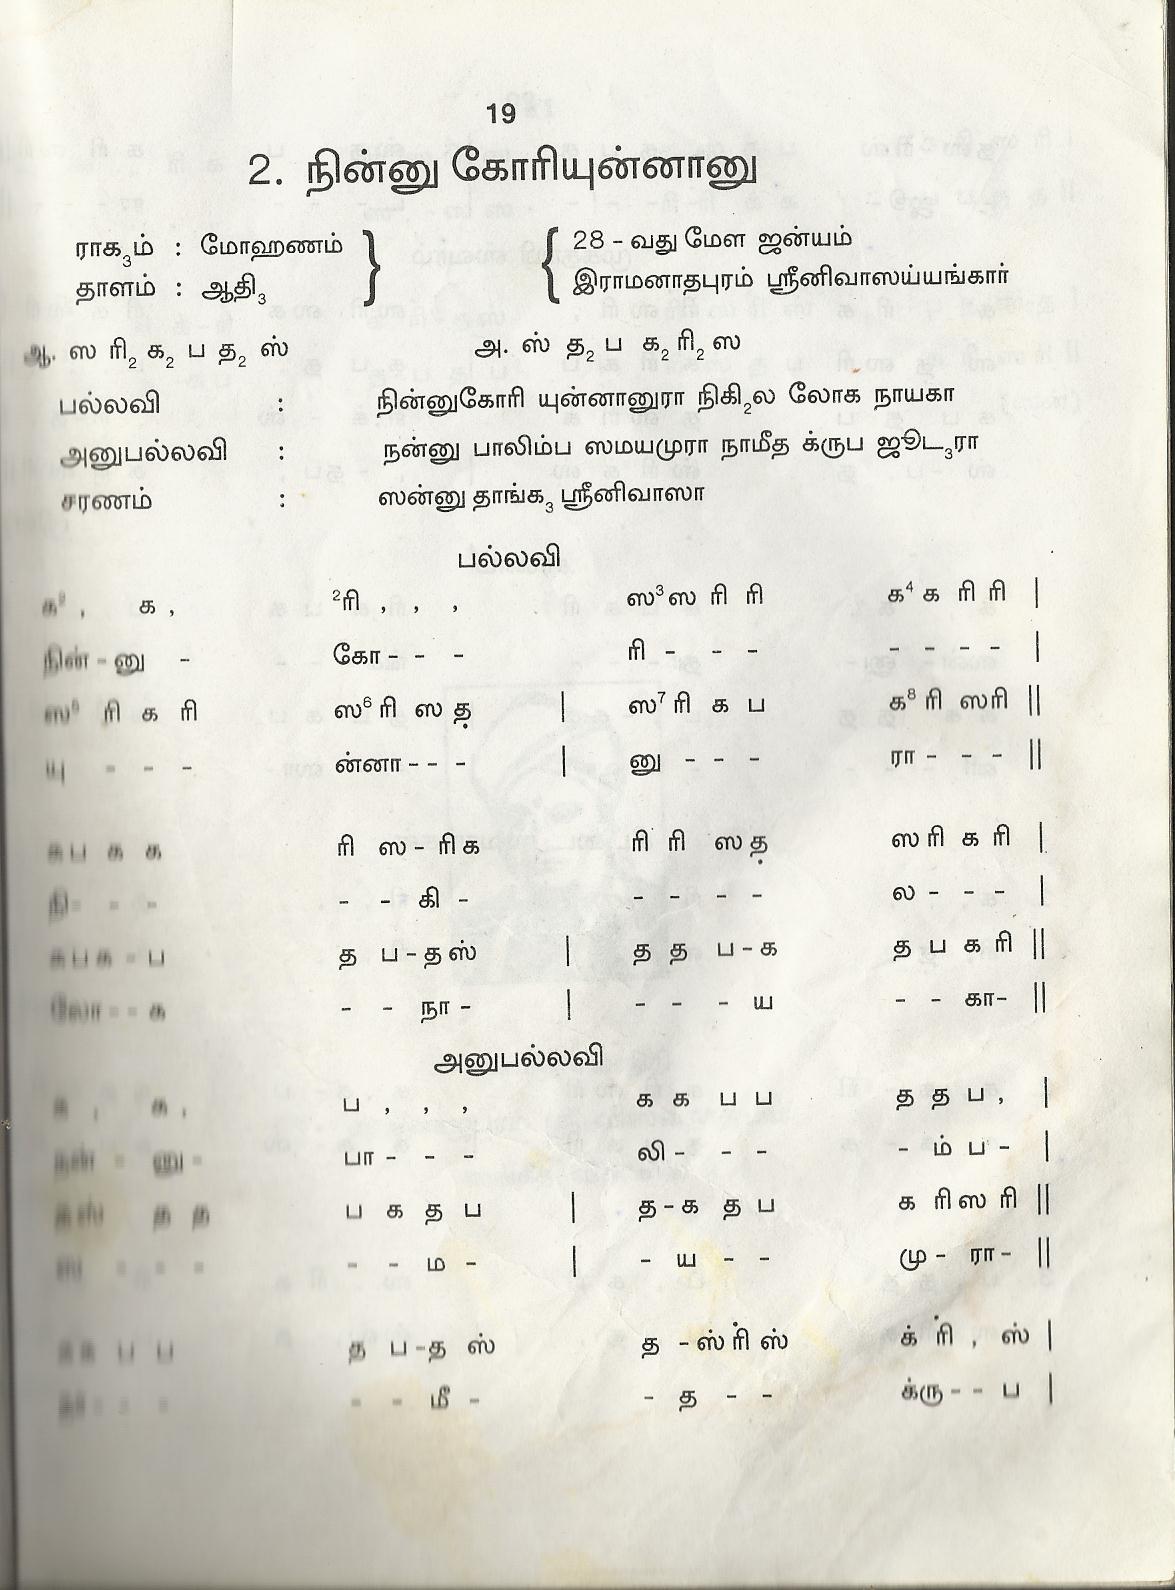 bharathiyar songs lyrics